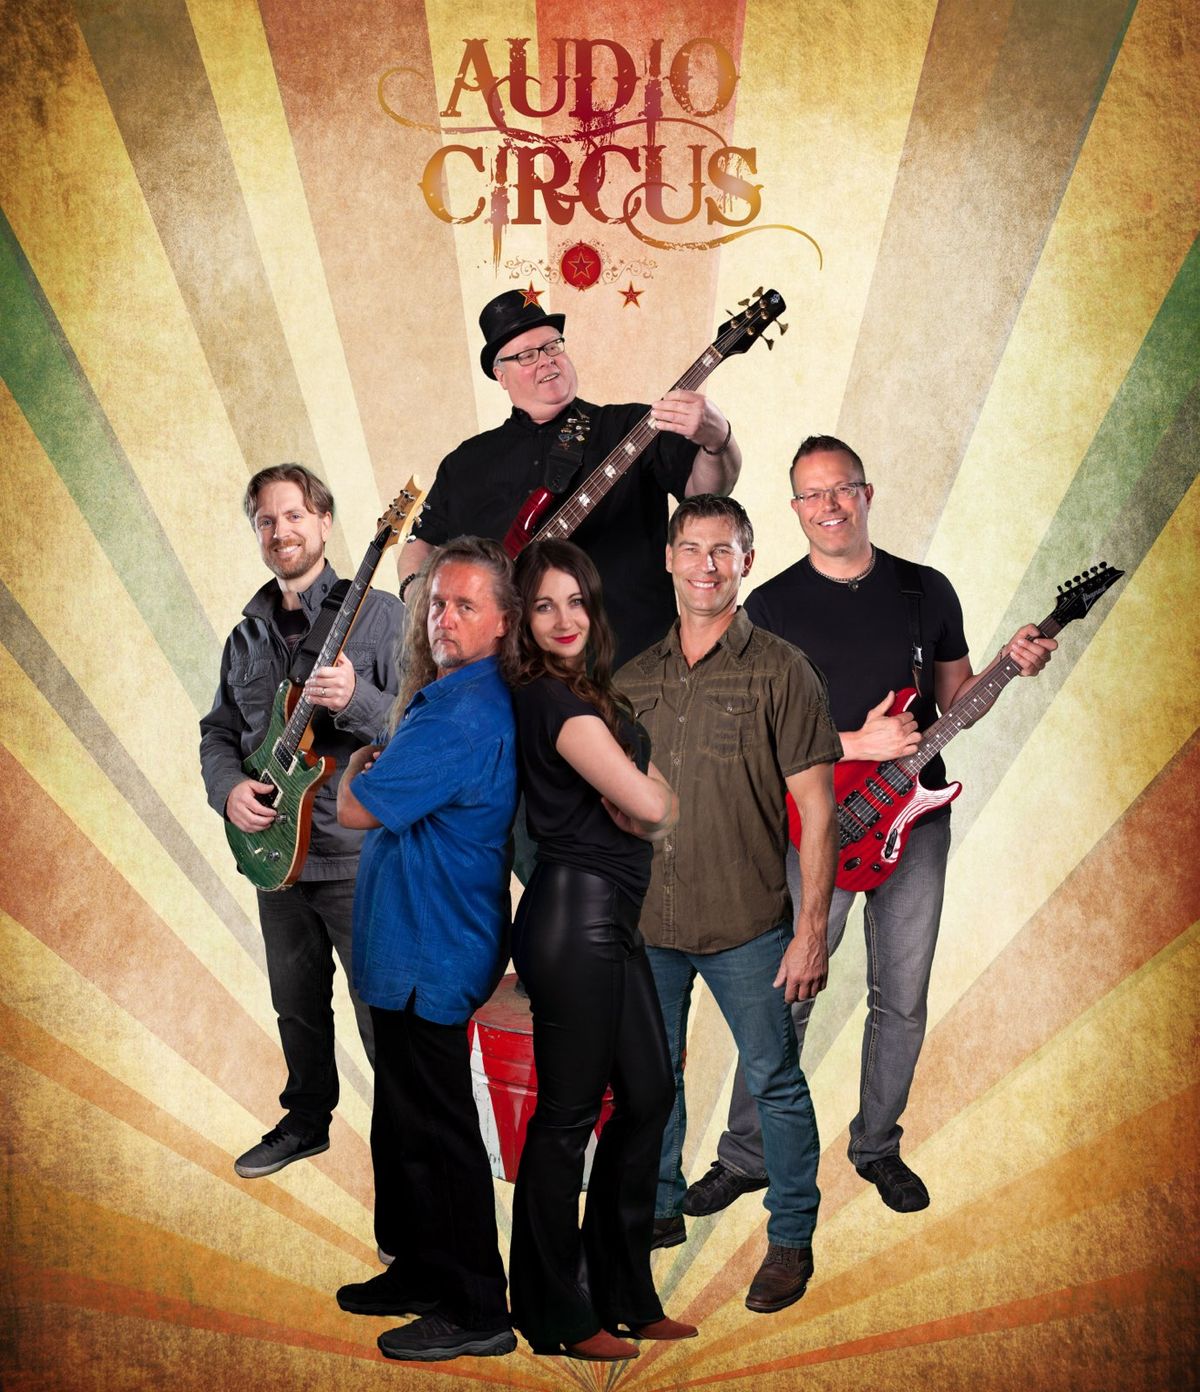 Audio Circus returns to Ziggy's in Stillwater!